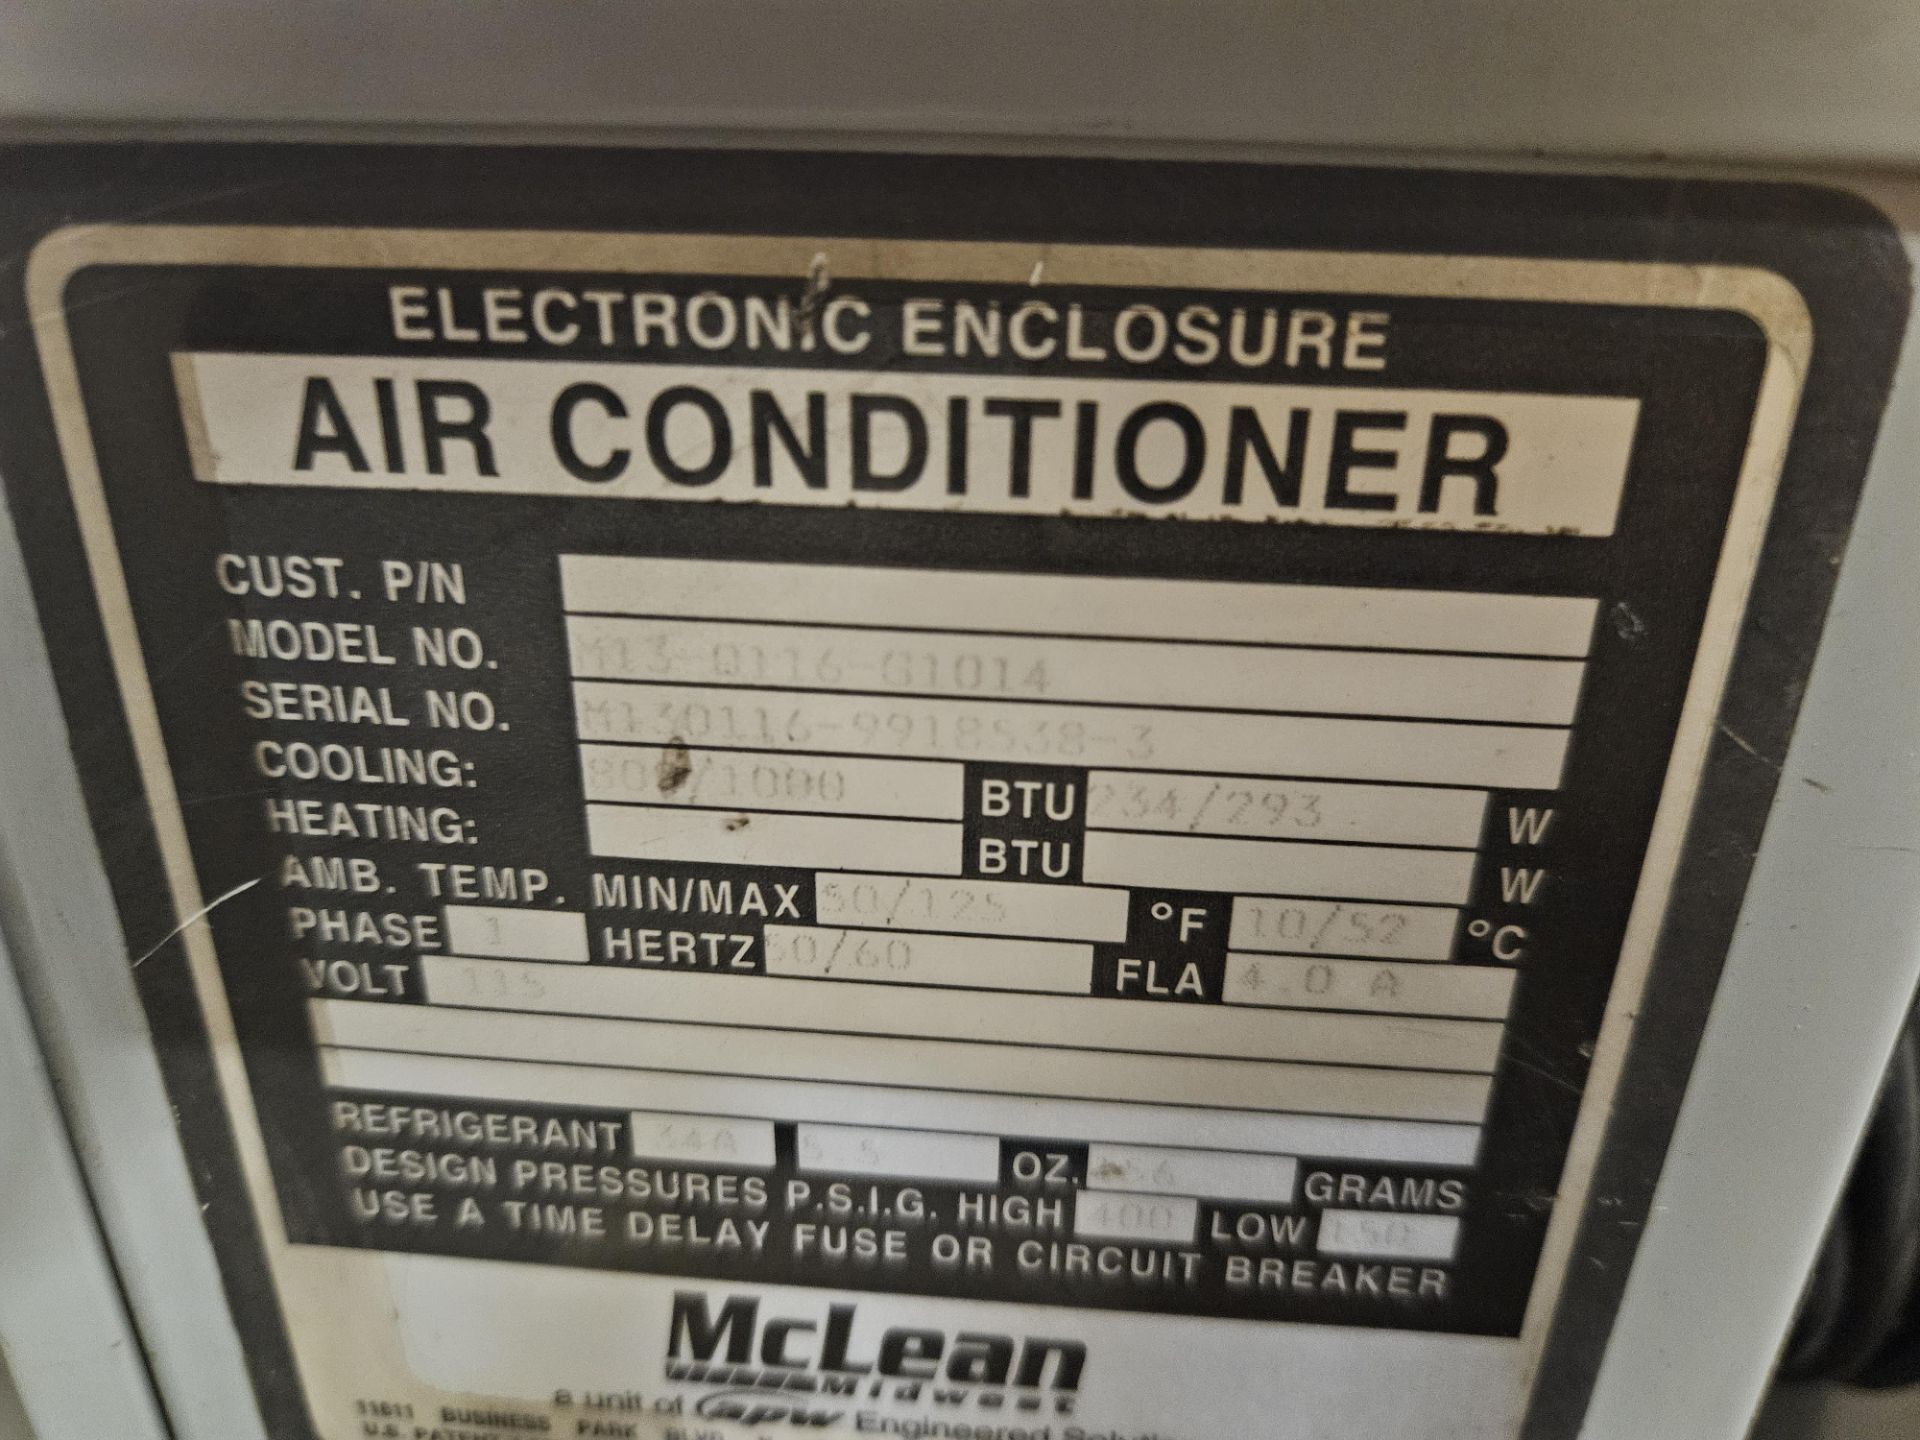 LOT - (1) MCLEAN ELECTRONIC ENCLOSURE AIR CONDITIONER, (1) PENTAIR CR230216G002 ELECTRONIC ENCLOSURE - Image 3 of 3